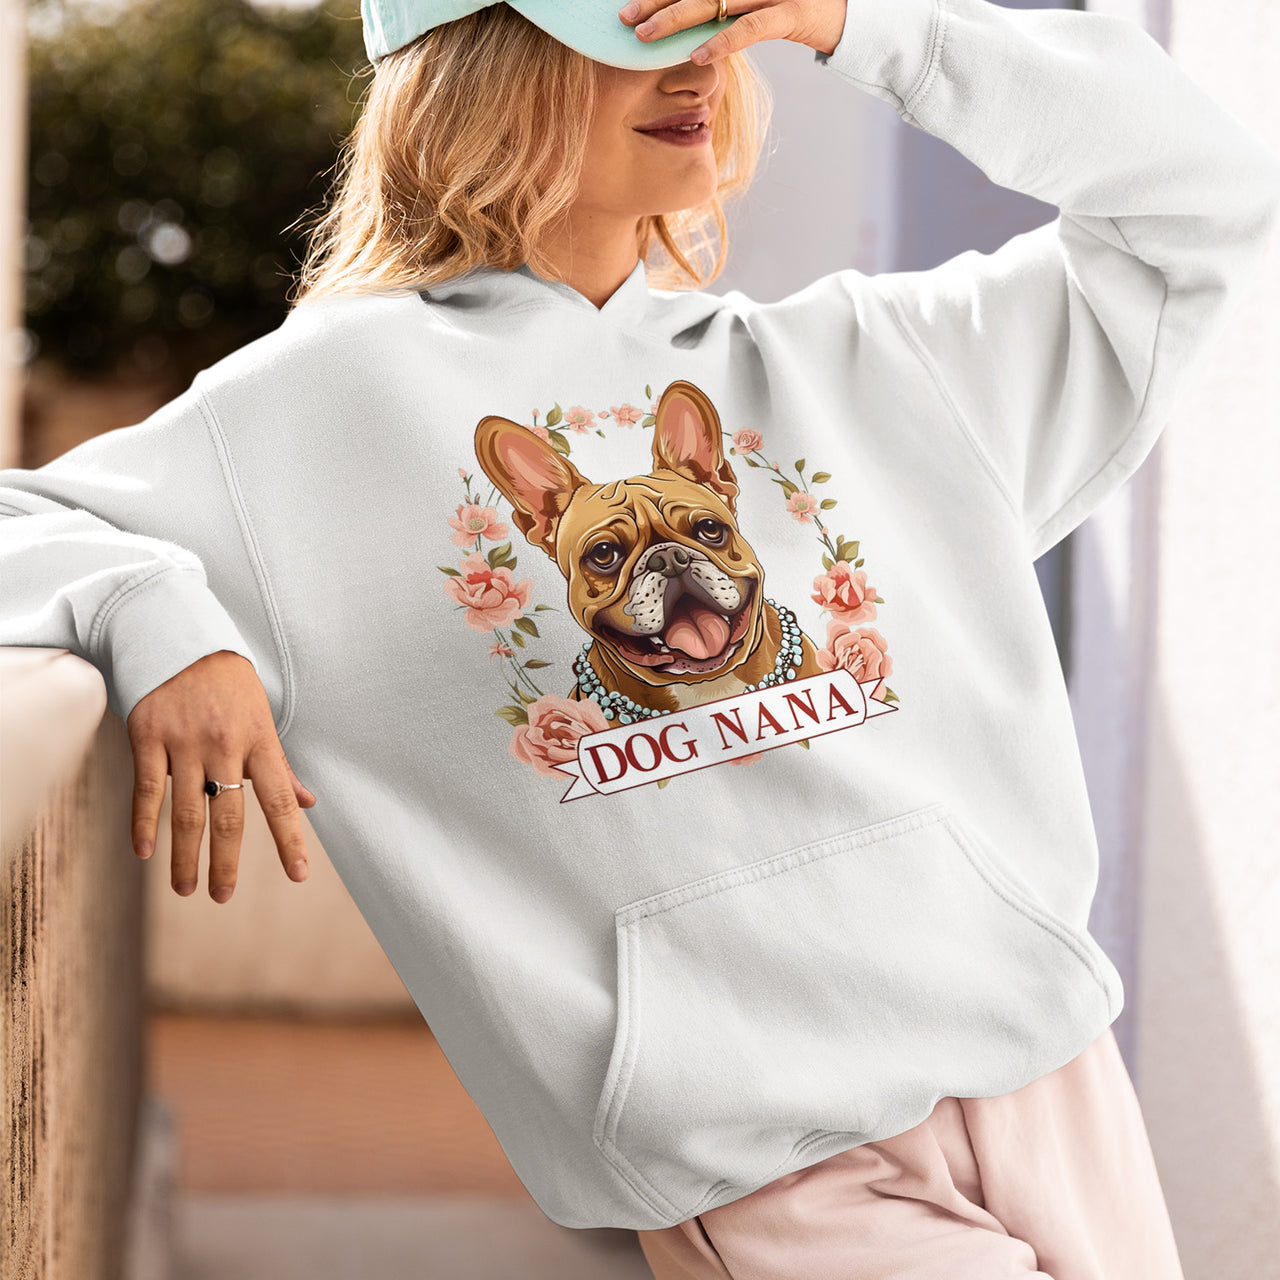 Bulldog T-shirt, Pet Lover Shirt, Dog Lover Shirt, Dog Nana  T-Shirt, Dog Owner Shirt, Gift For Dog Grandma, Funny Dog Shirts, Women Dog T-Shirt, Mother's Day Gift, Dog Lover Wife Gifts, Dog Shirt